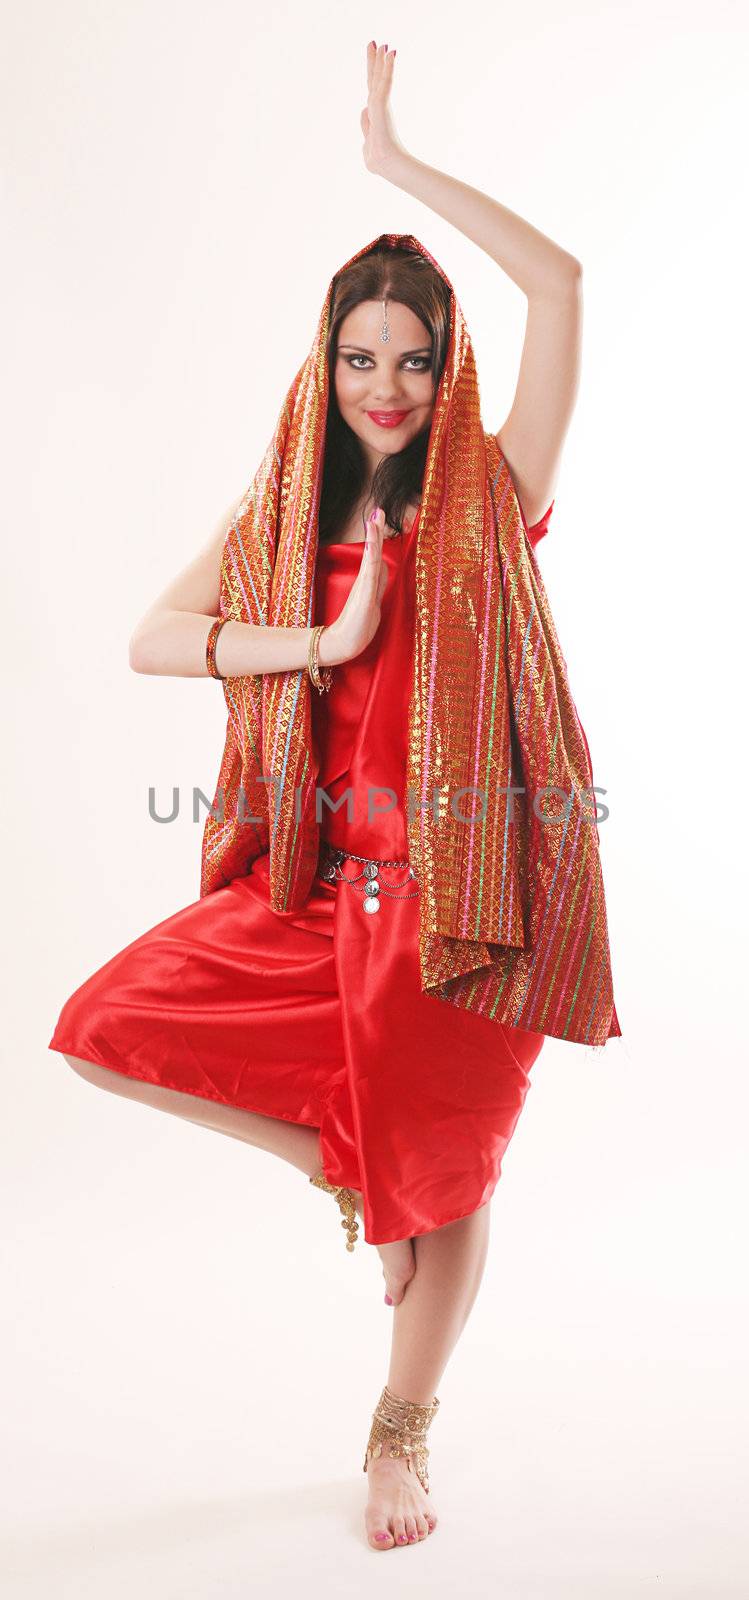 indian dancer by lipik